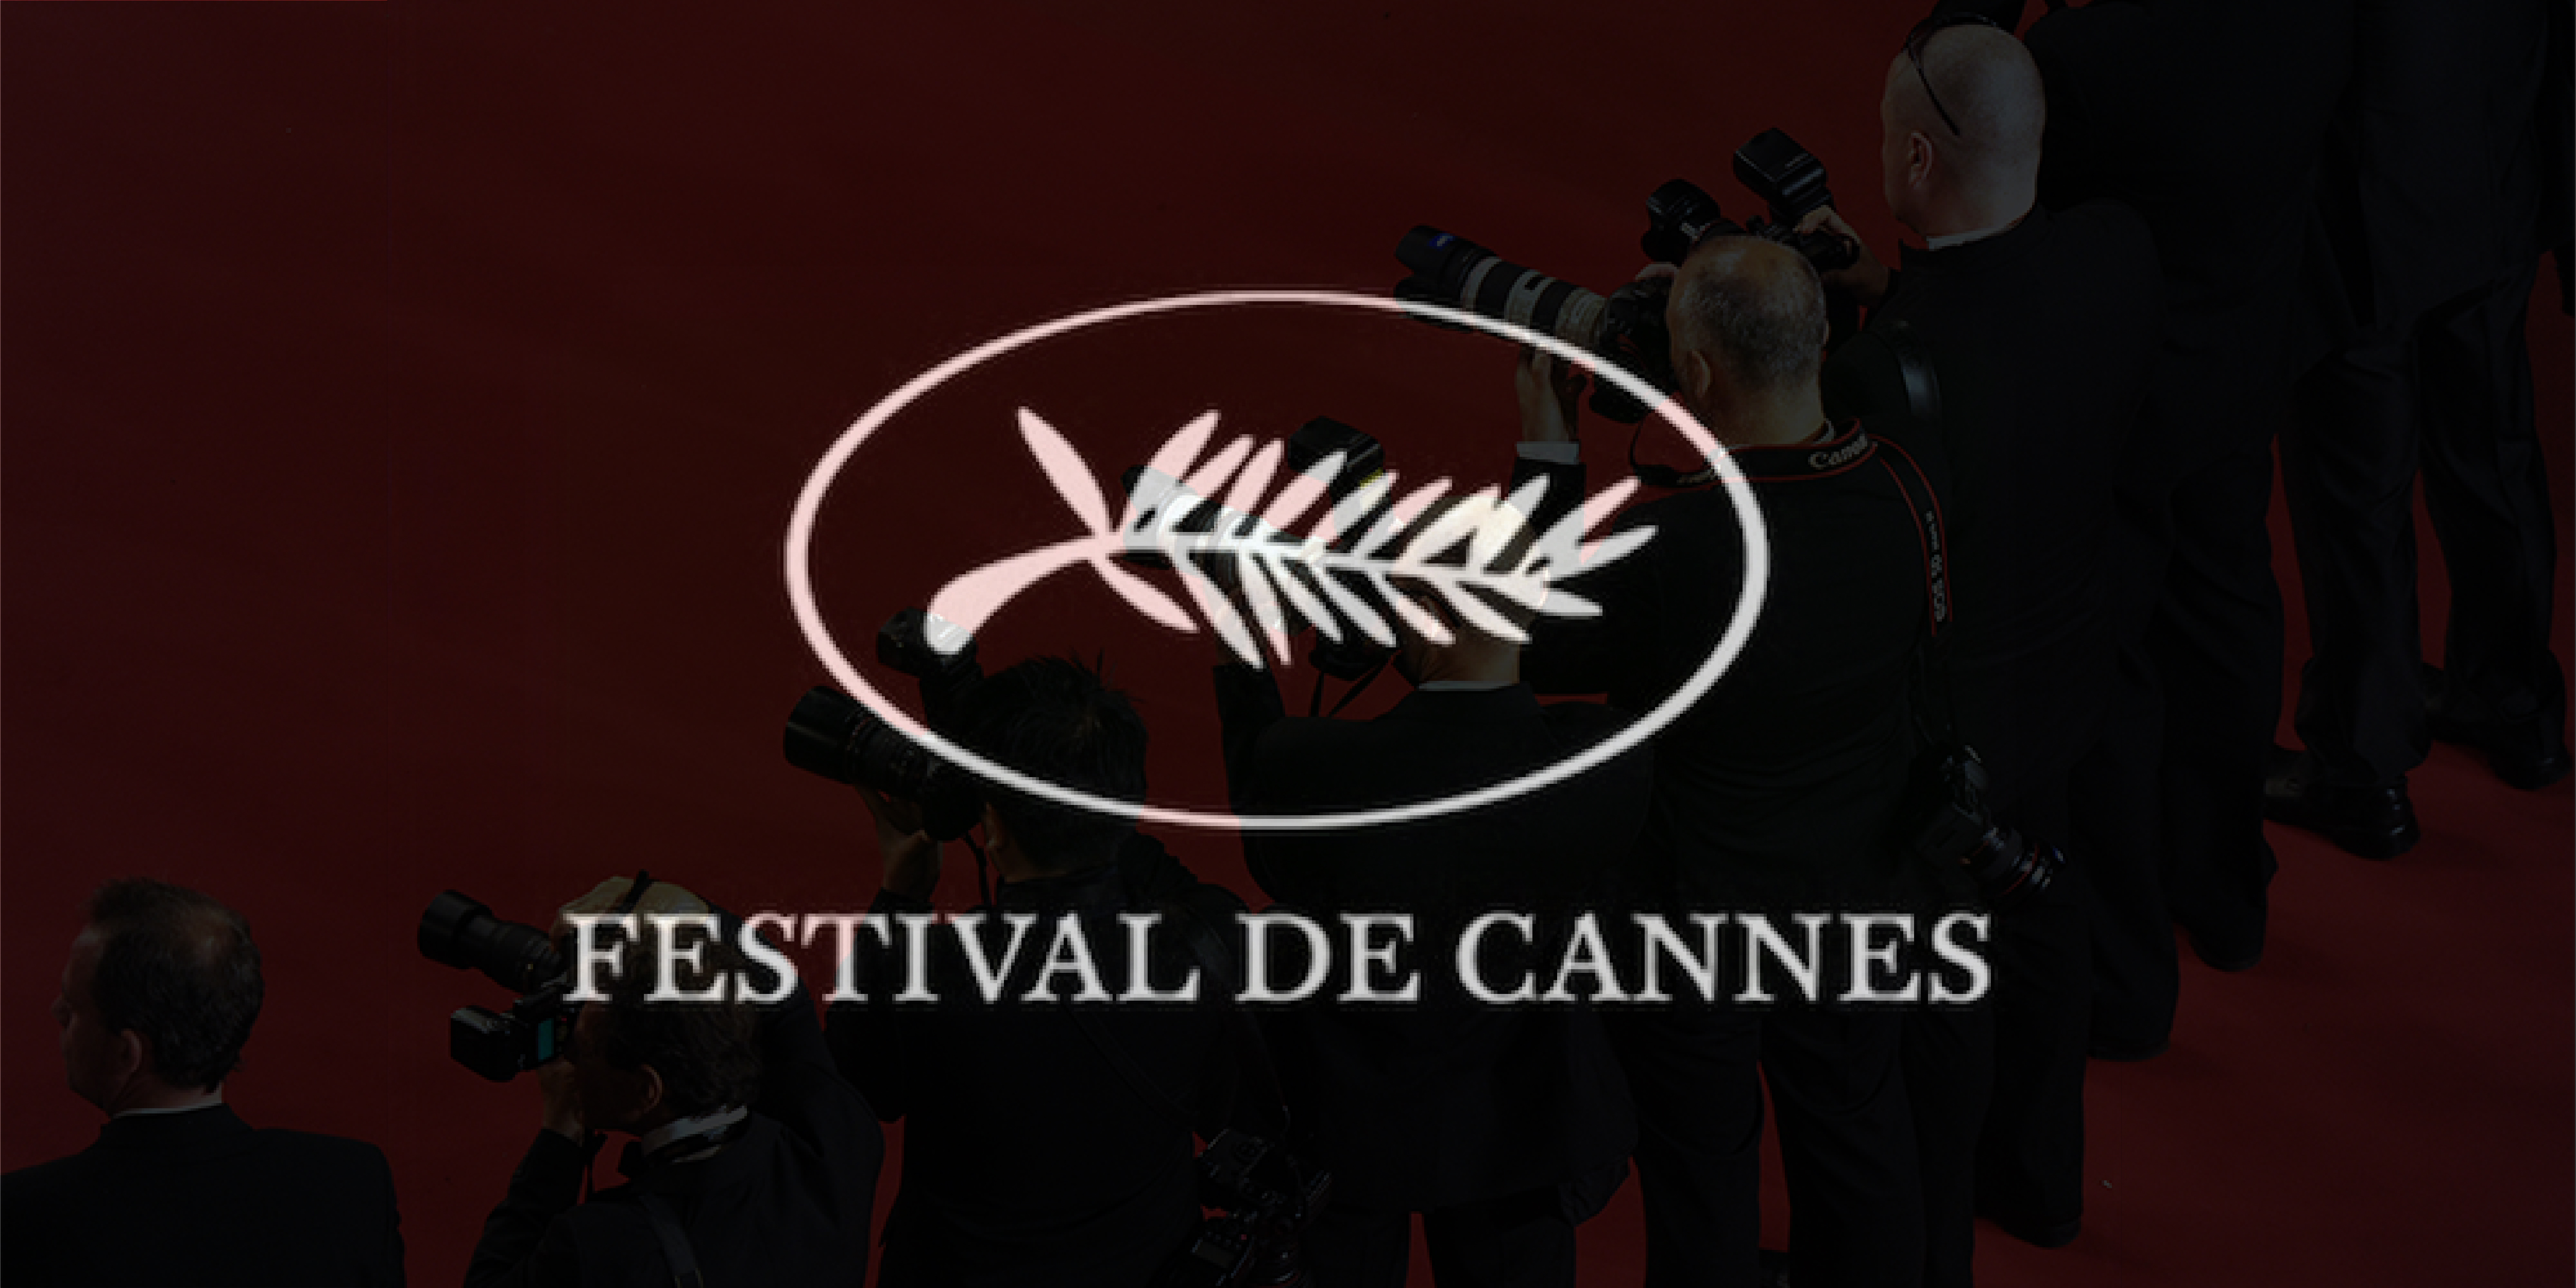 Spot the Elegant Diamond Jewellery at the Most Splendid Cannes Film Festival